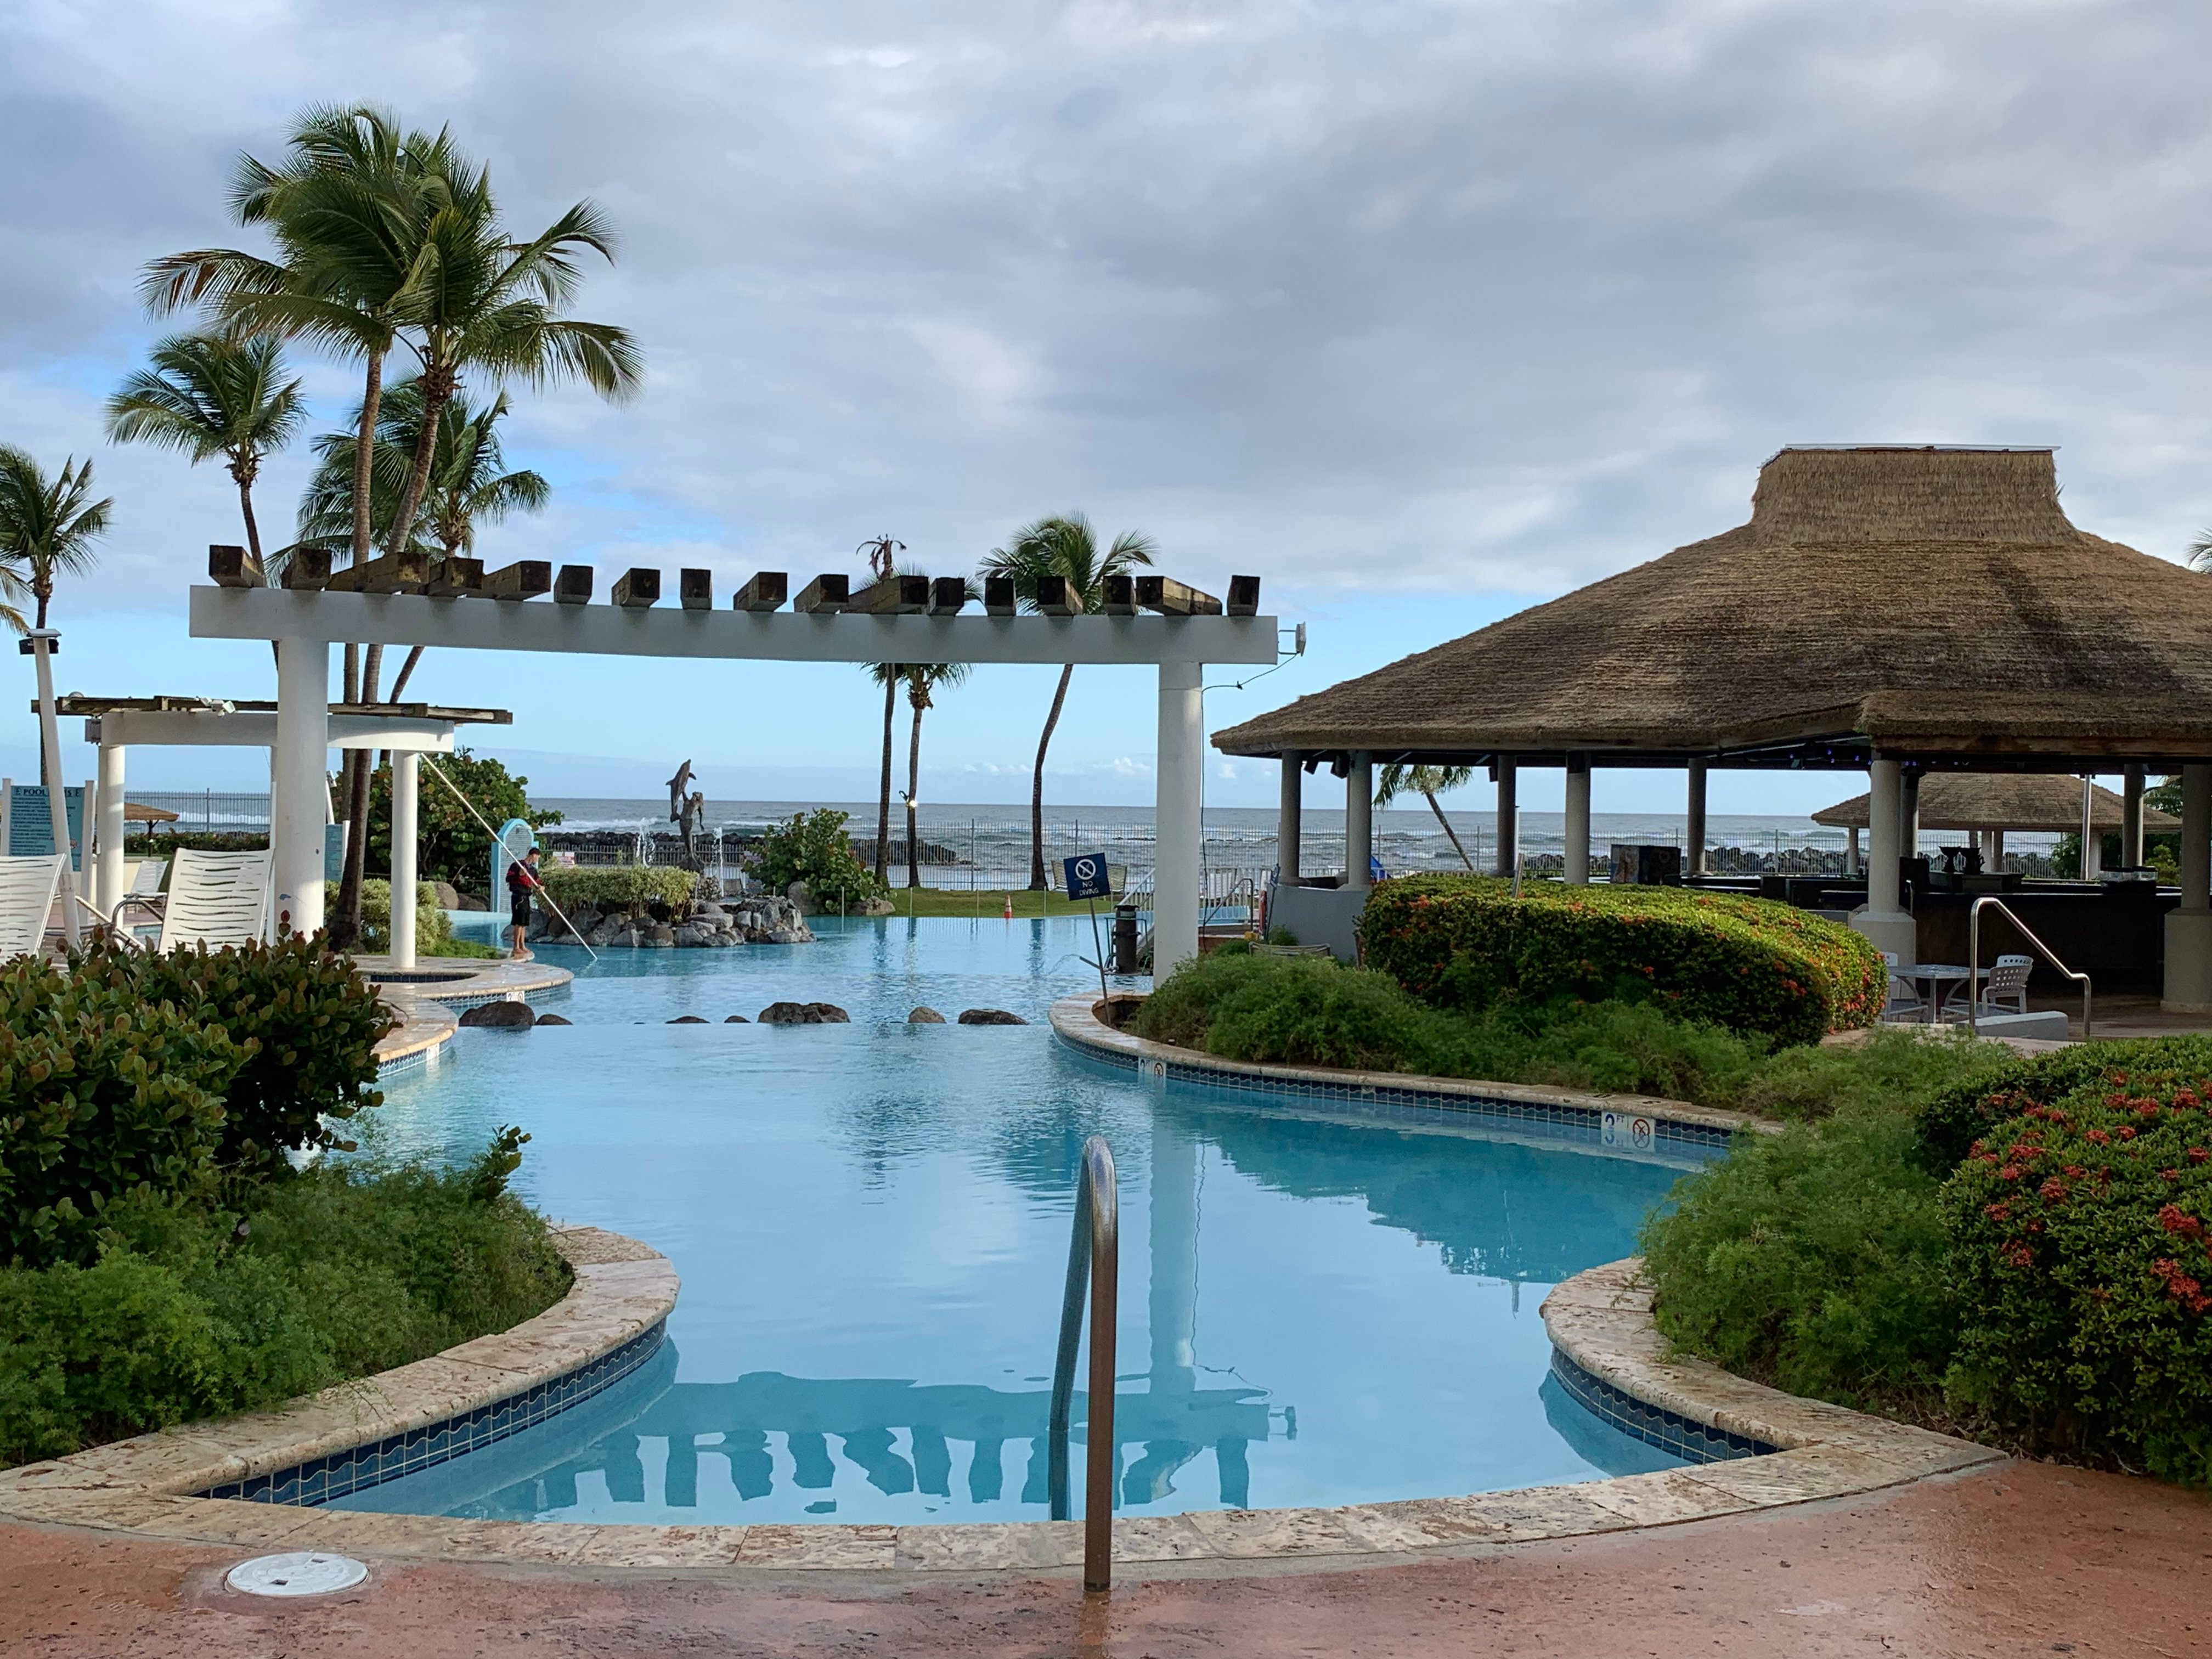 Embassy Suites by Hilton Dorado del Mar Beach Resort - UPDATED